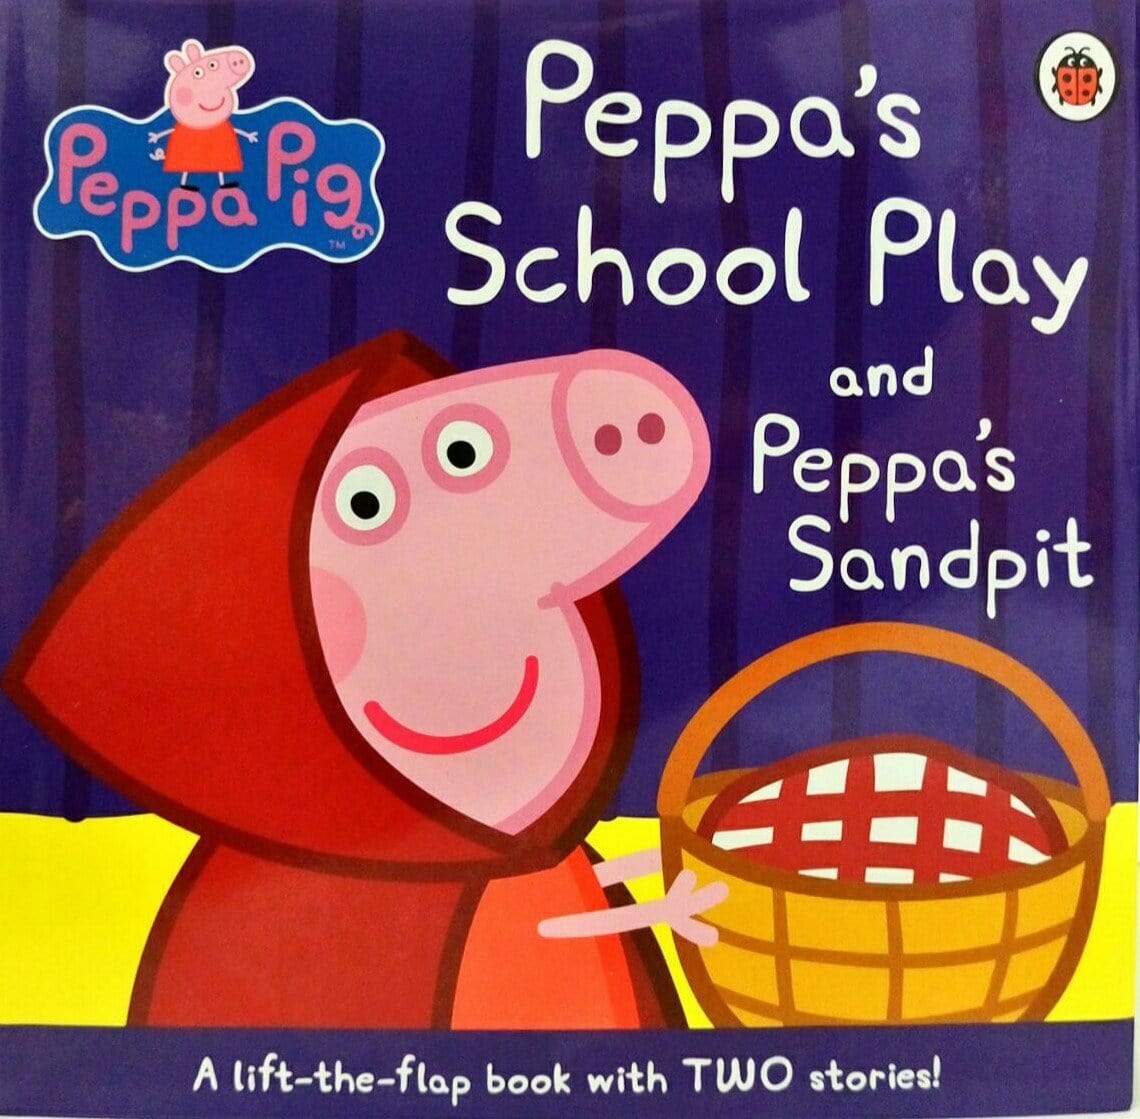 Peppa's School Play and Peppa's Sandpit